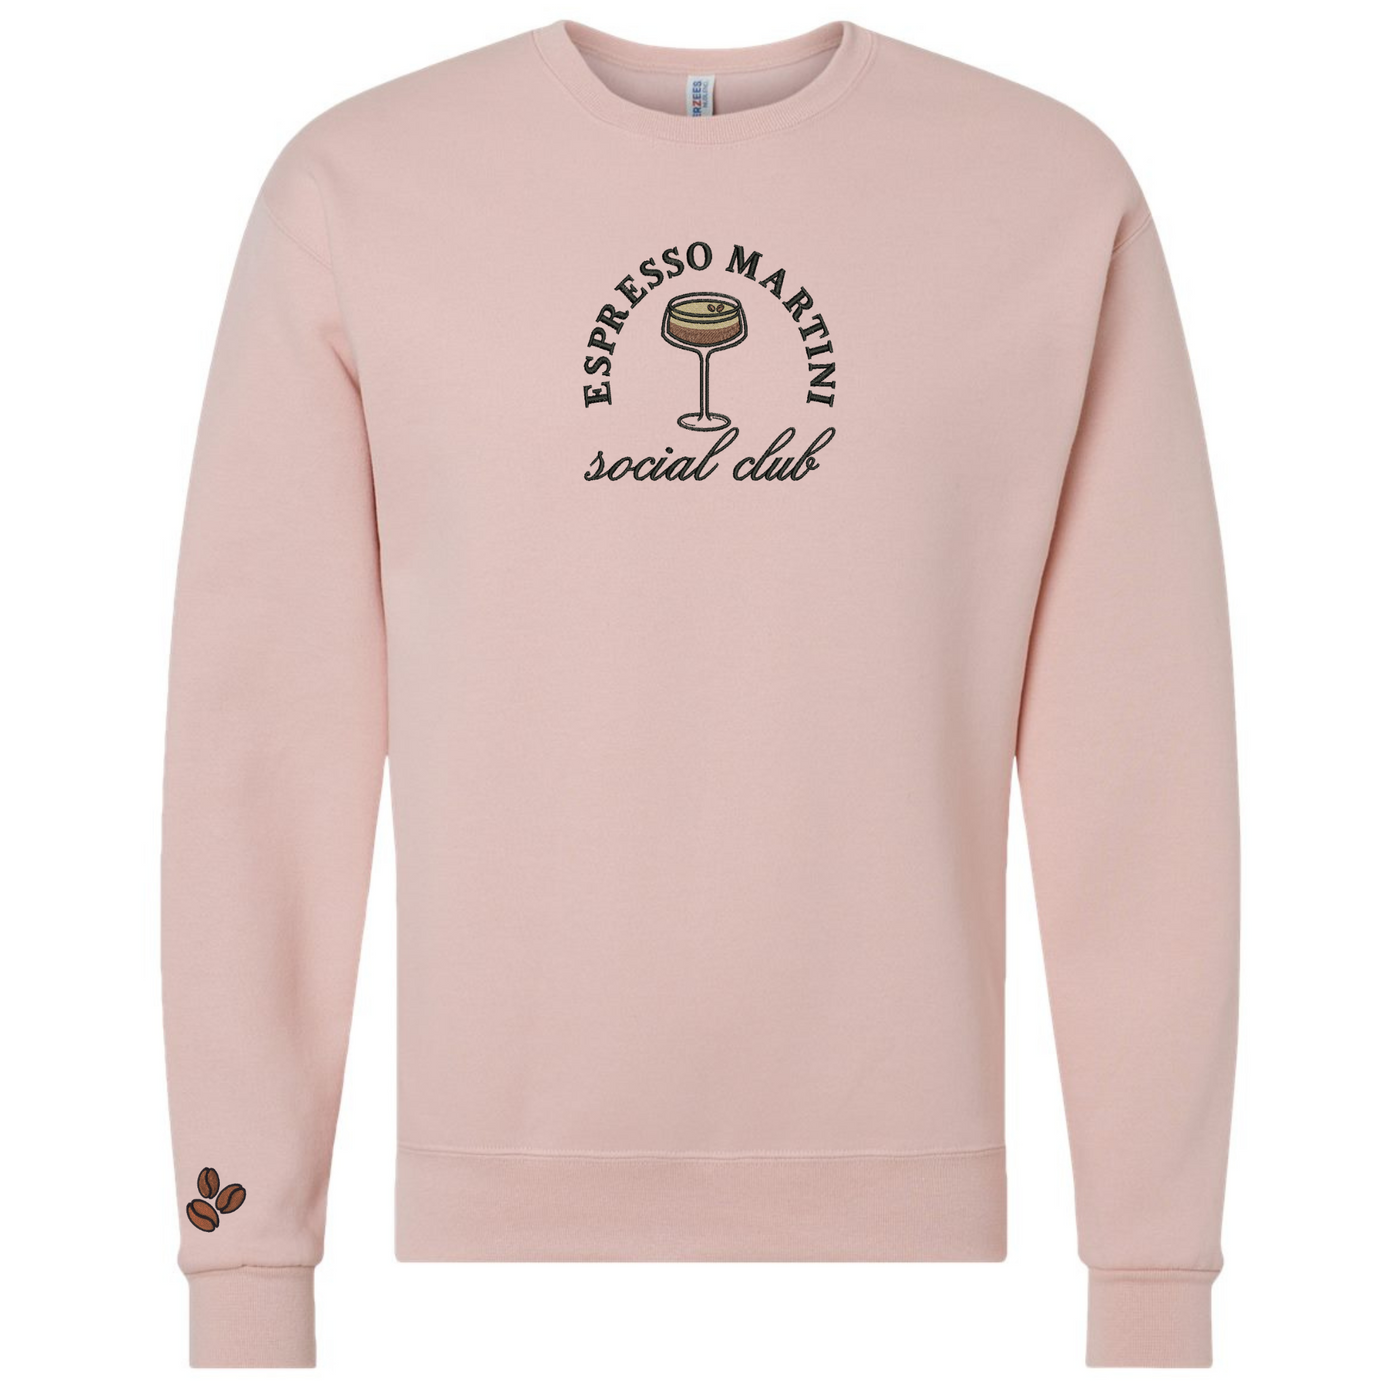 'Espresso Martini Social Club' Crewneck Sweatshirt